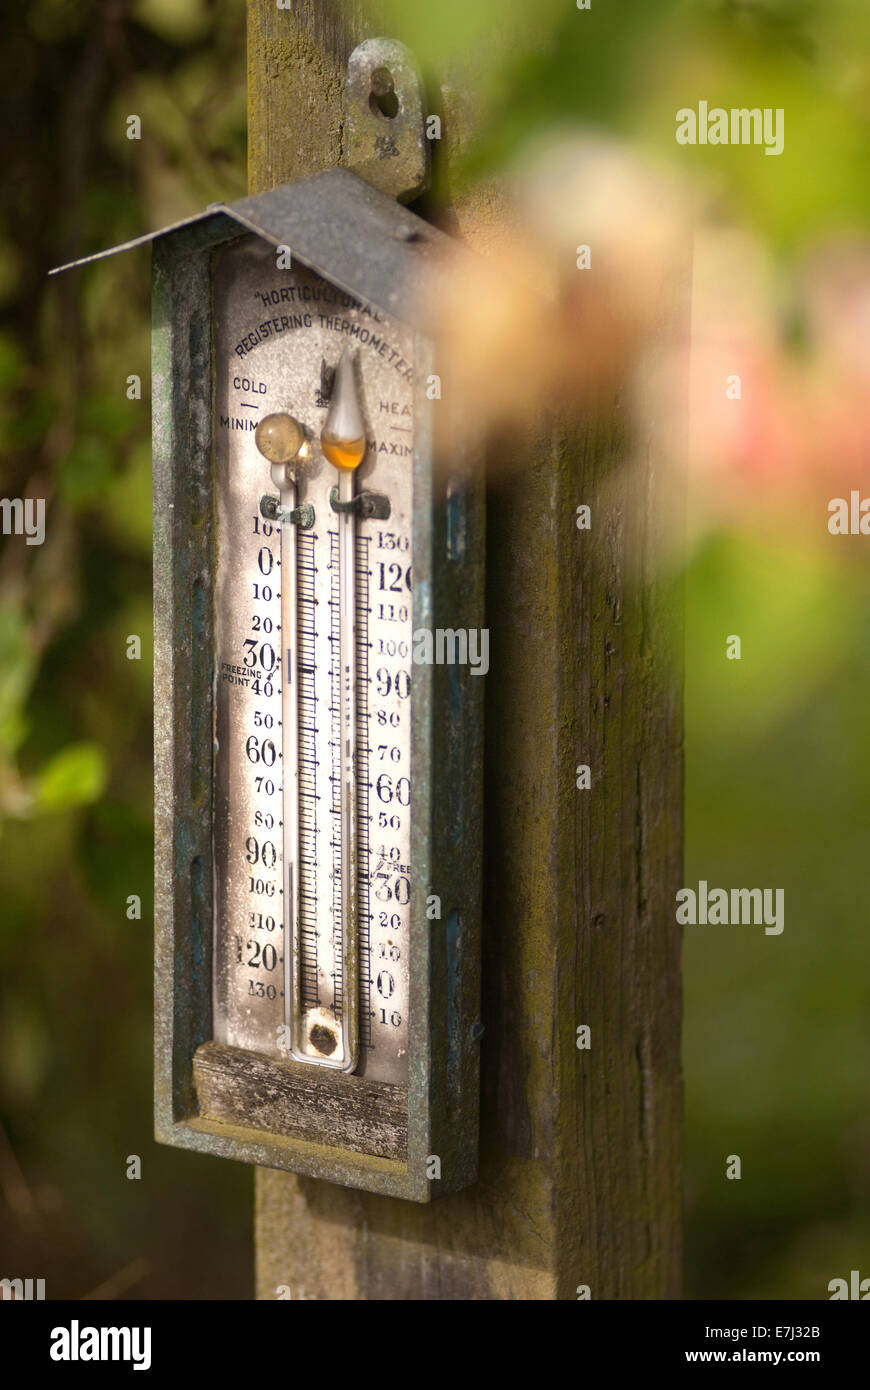 https://c8.alamy.com/comp/E7J32B/maximum-minimum-garden-thermometer-E7J32B.jpg